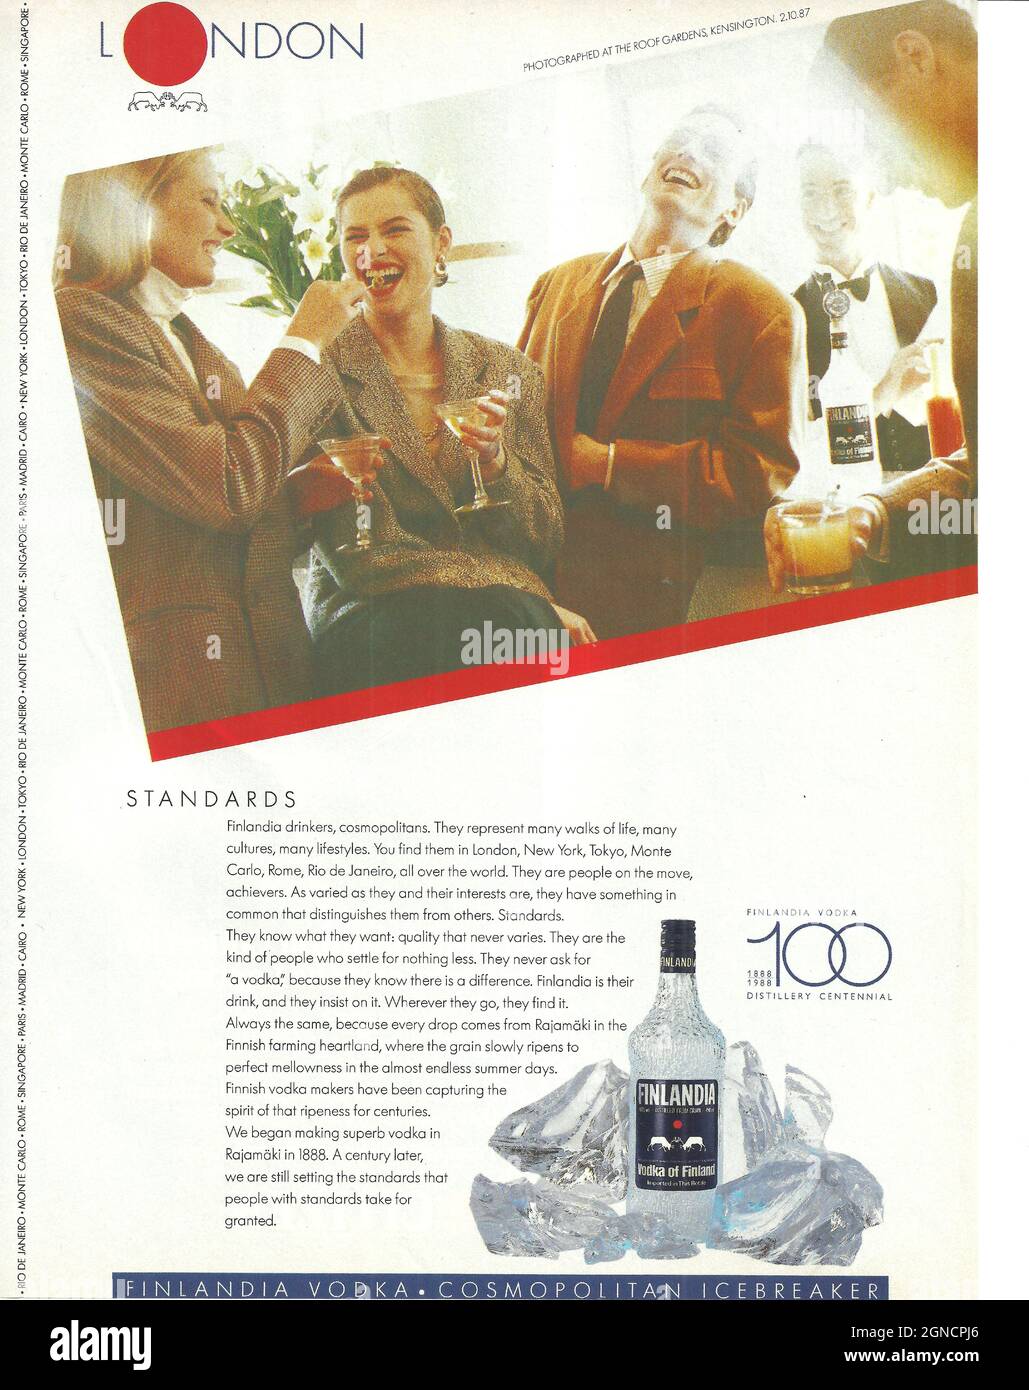 Finlandia vodka - paper vintage advert ad advertisement 1980 1970 Finlandia vodka bottle and glass Stock Photo